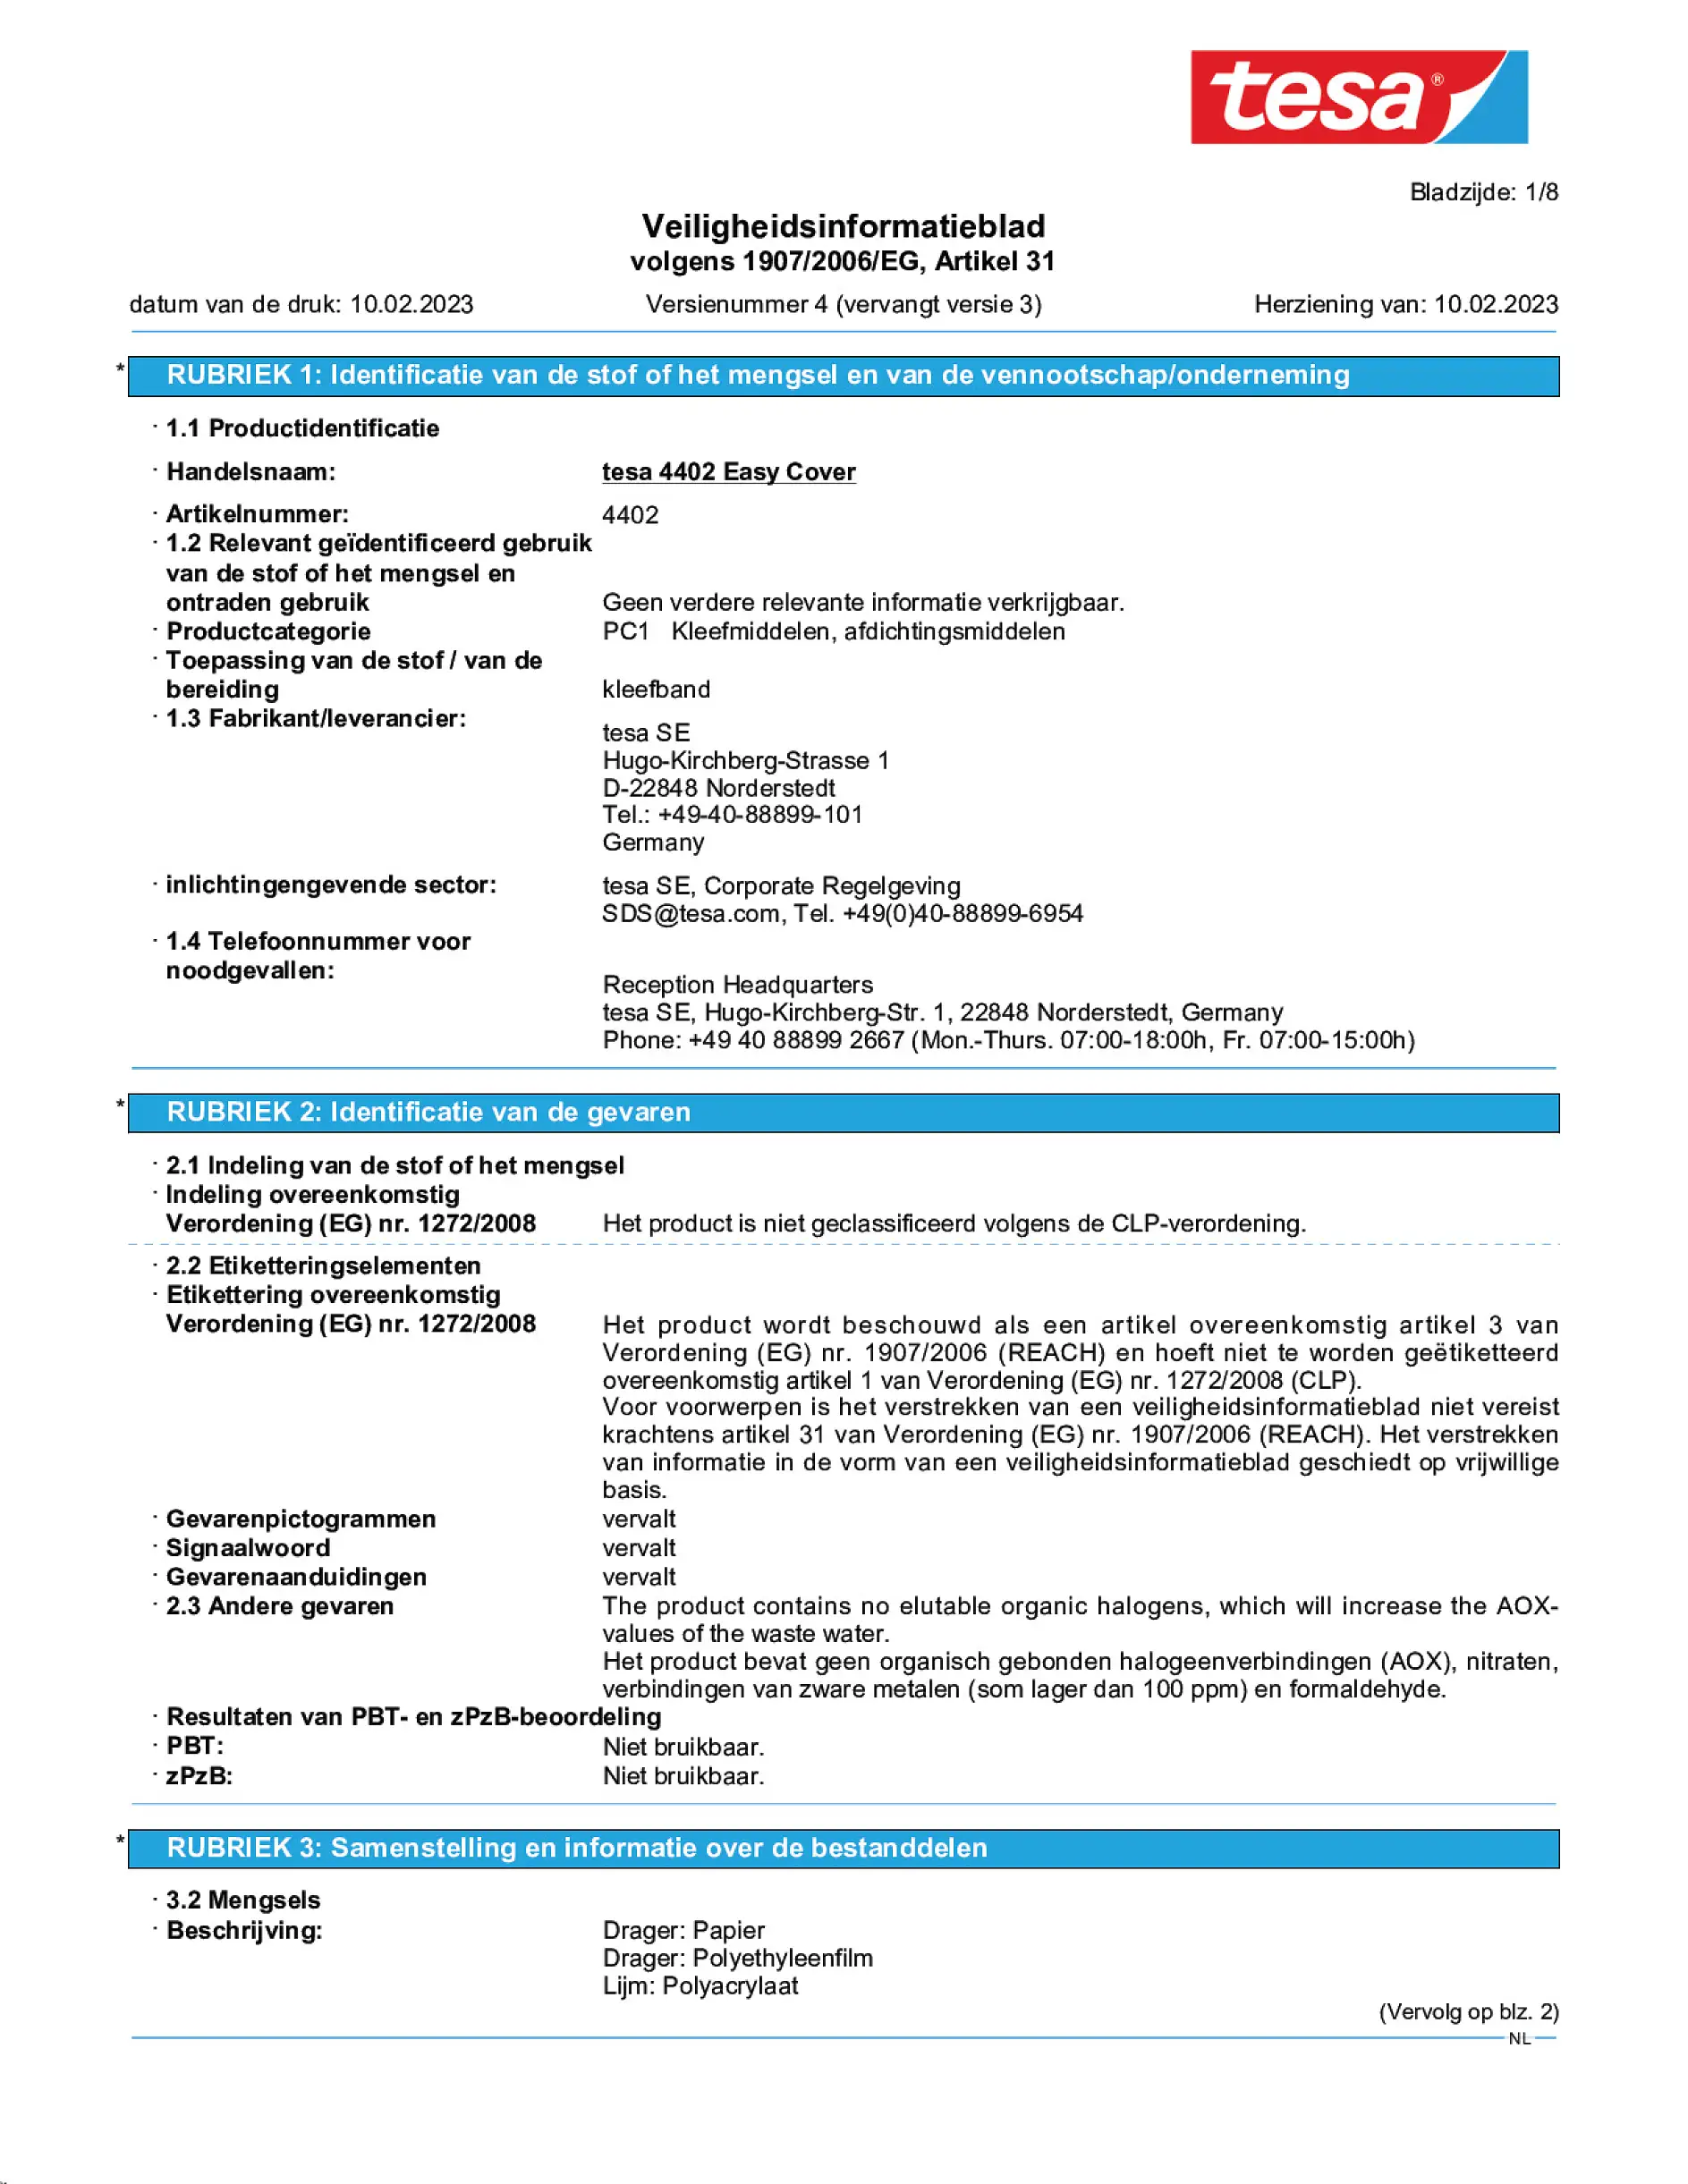 Safety data sheet_tesa® Professional 04402_nl-NL_v4